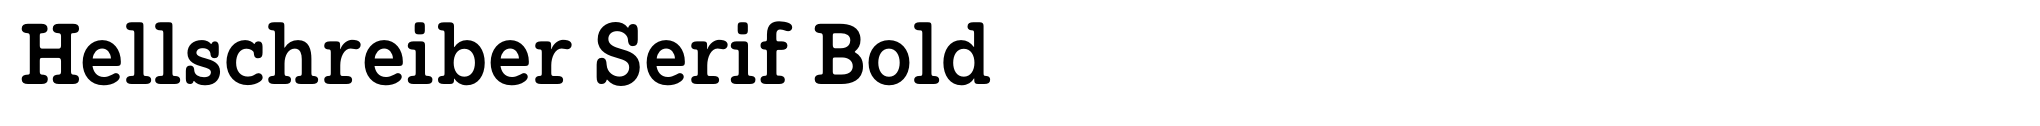 Hellschreiber Serif Bold image